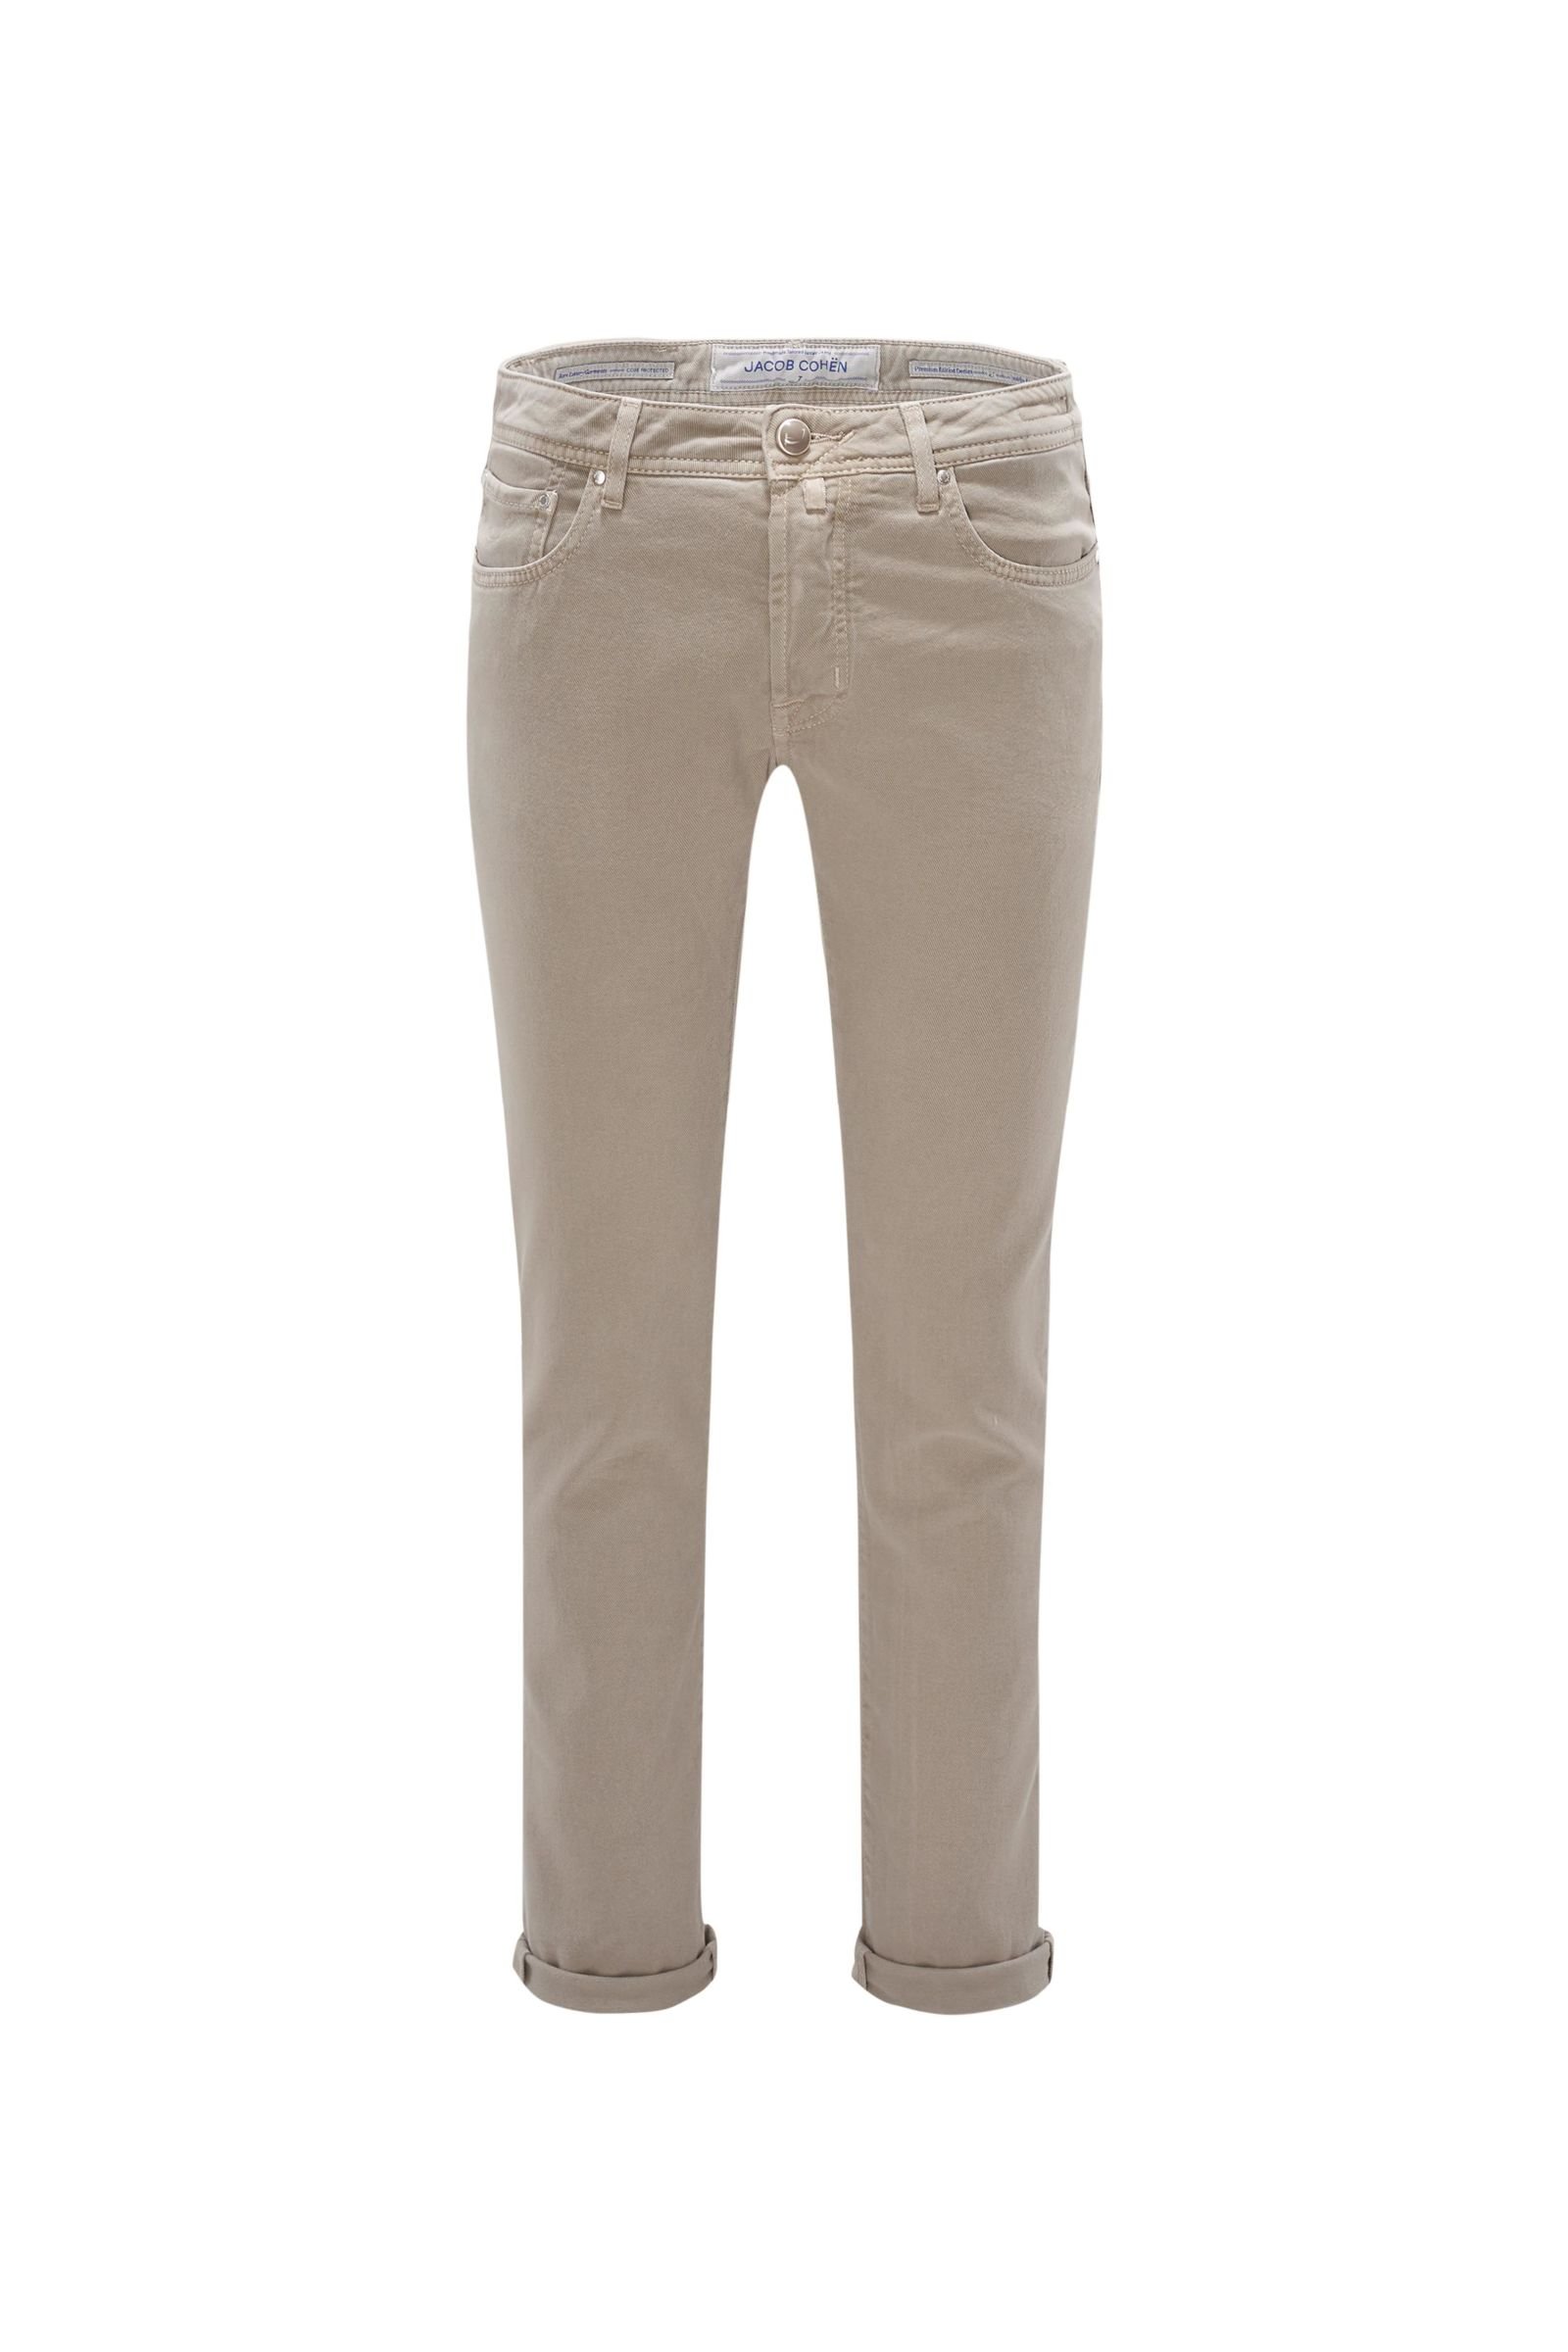 Cotton trousers 'J688 Comfort Slim Fit' beige